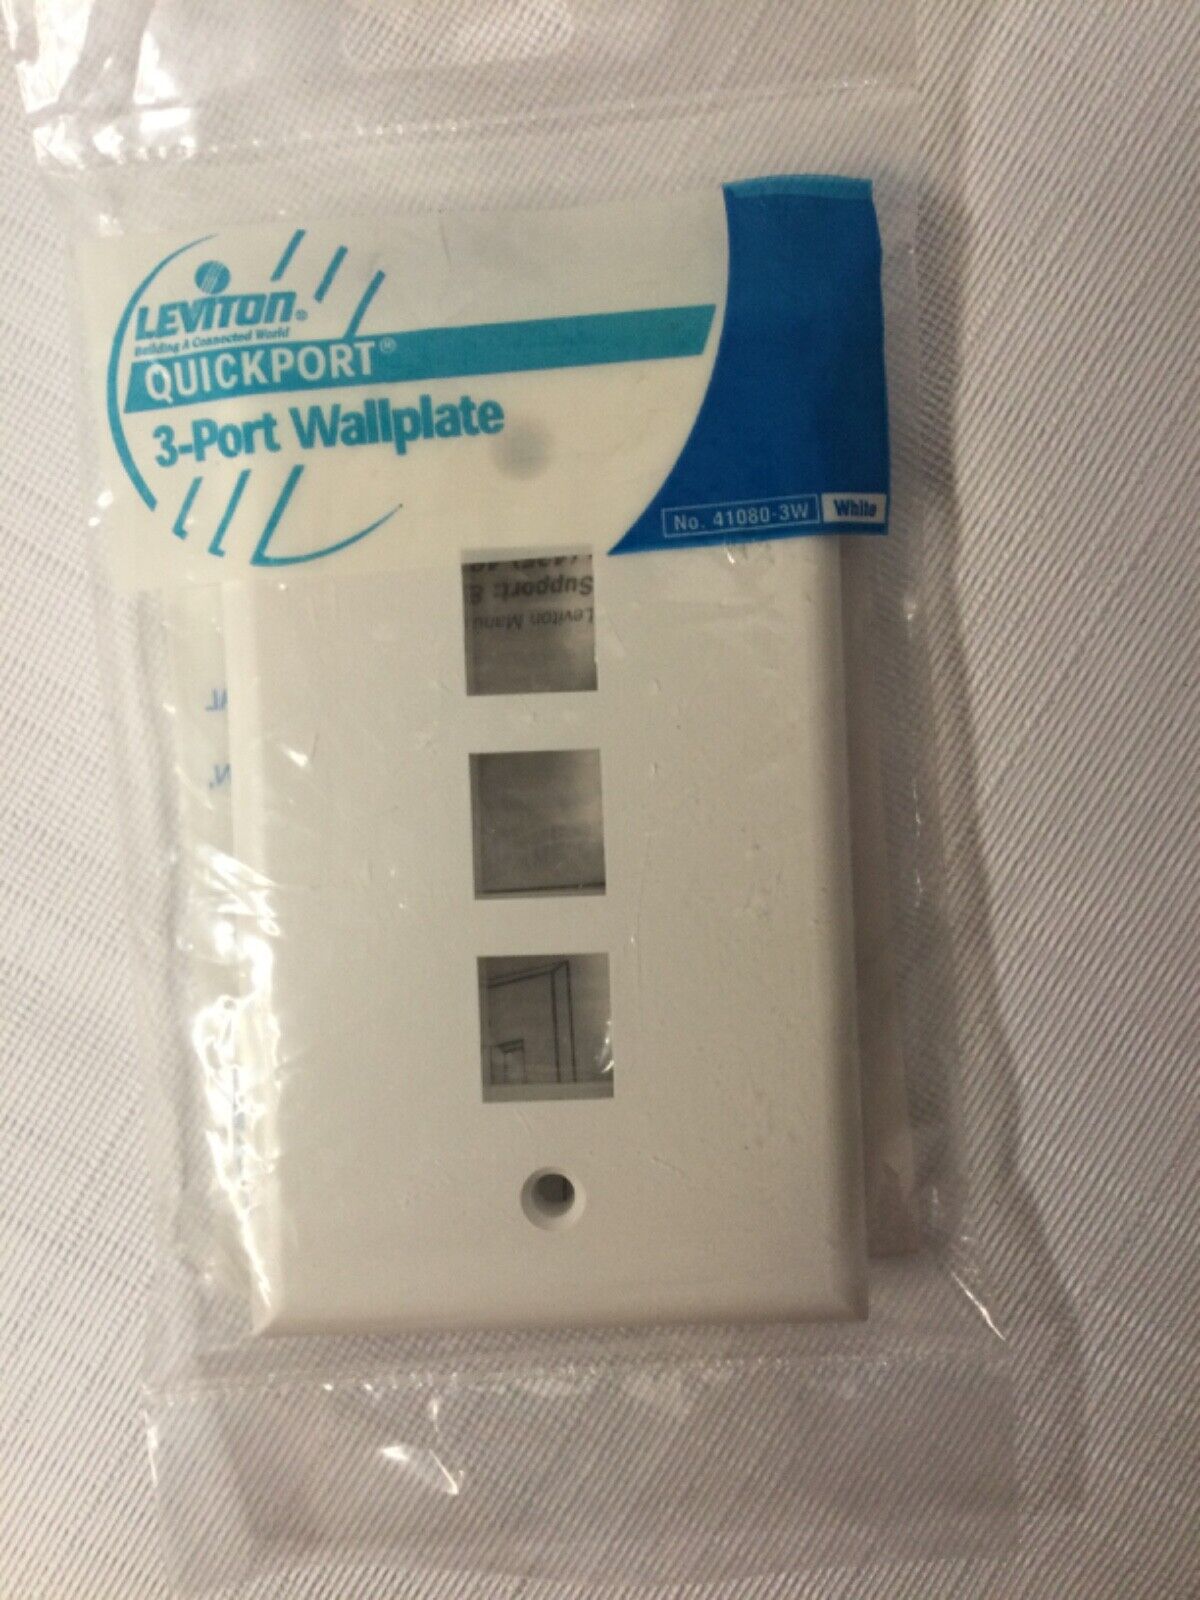 Leviton QuickPort 3-Port Wall Plate (NIP) Plastic White R04-41080-3W